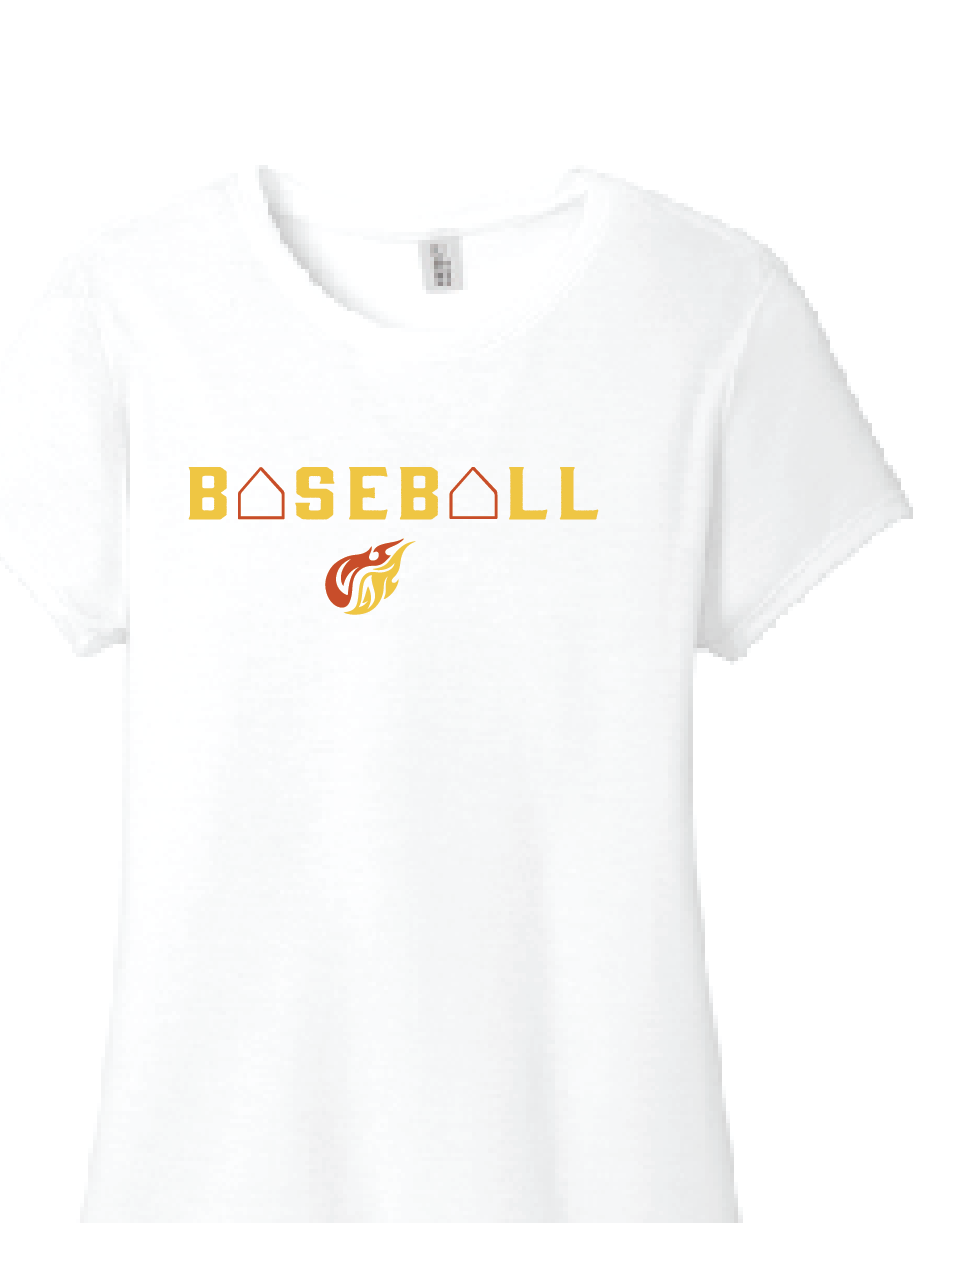 Baseball Women’s Perfect TriBlend Tee / White / Heat Baseball